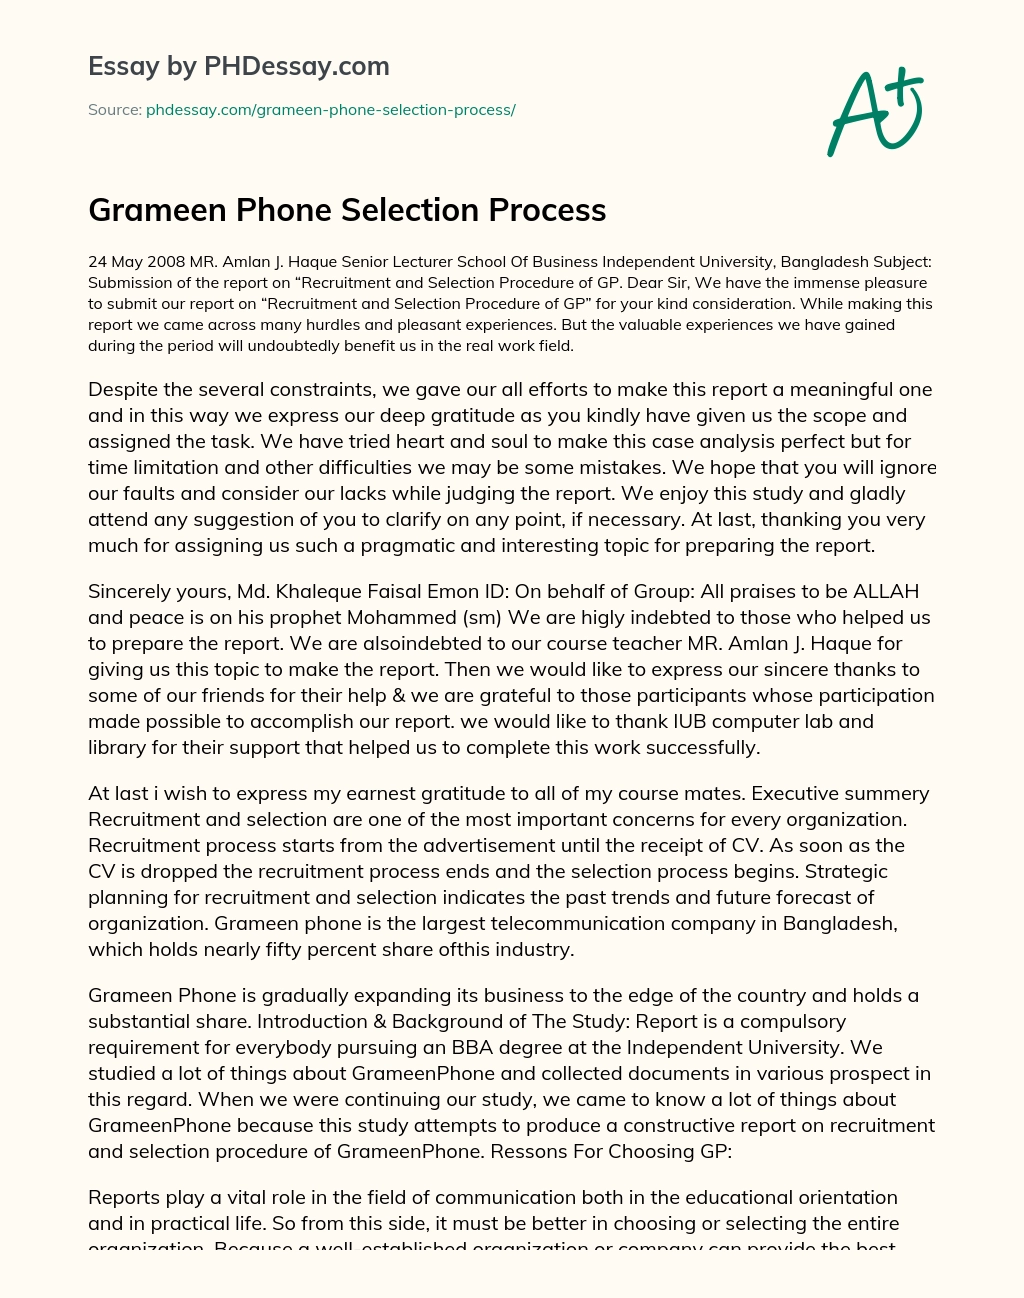 Grameen Phone Selection Process essay